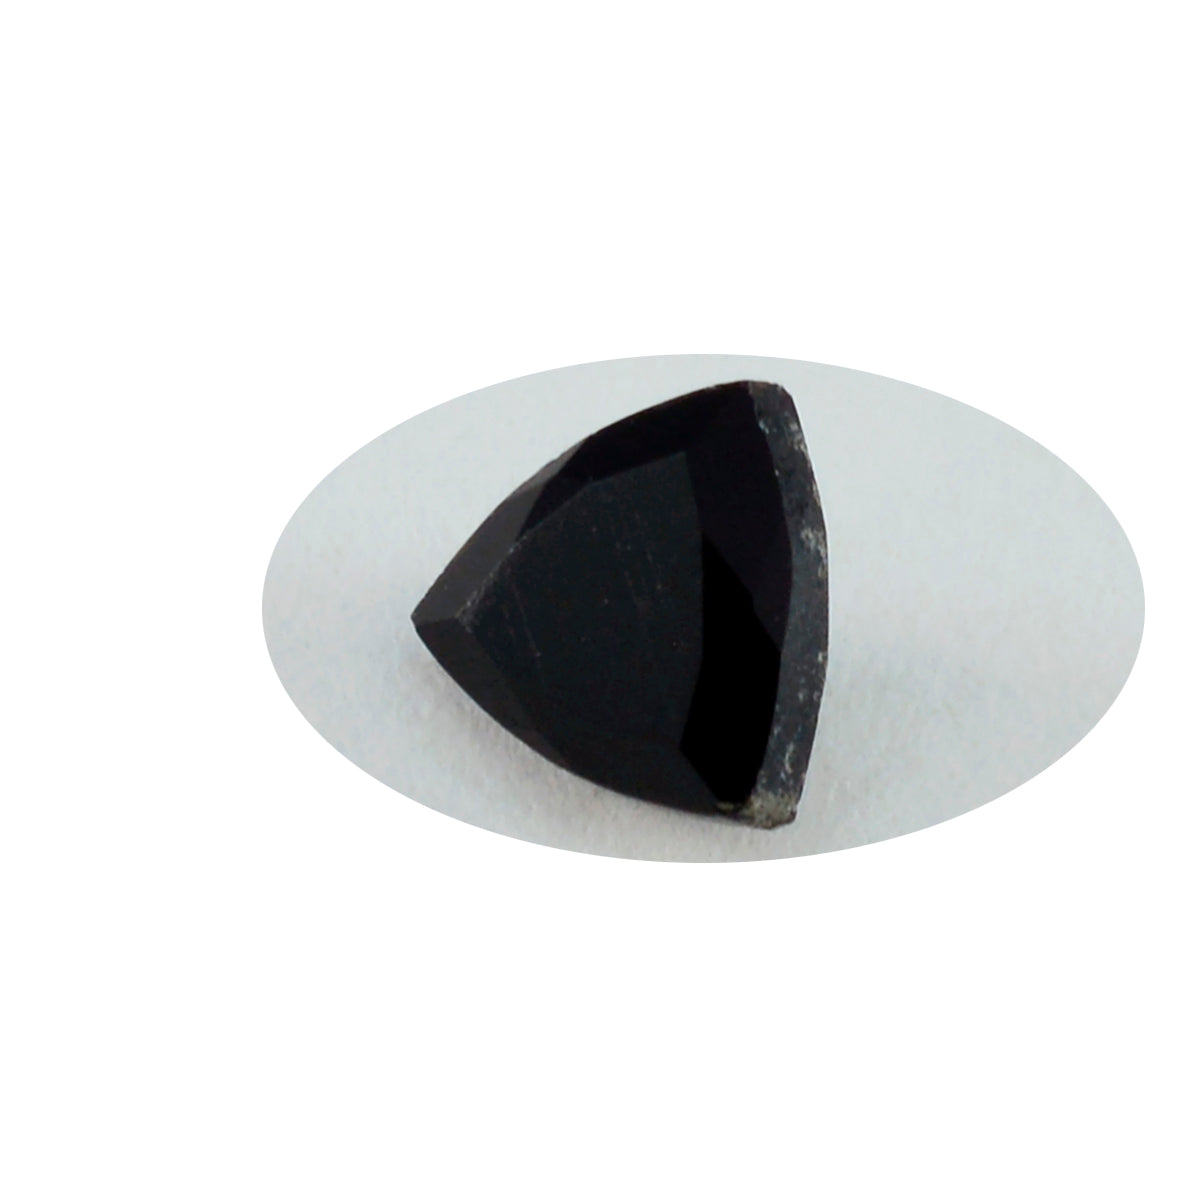 Riyogems 1PC Genuine Black Onyx Faceted 9x9 mm Trillion Shape beautiful Quality Loose Gem